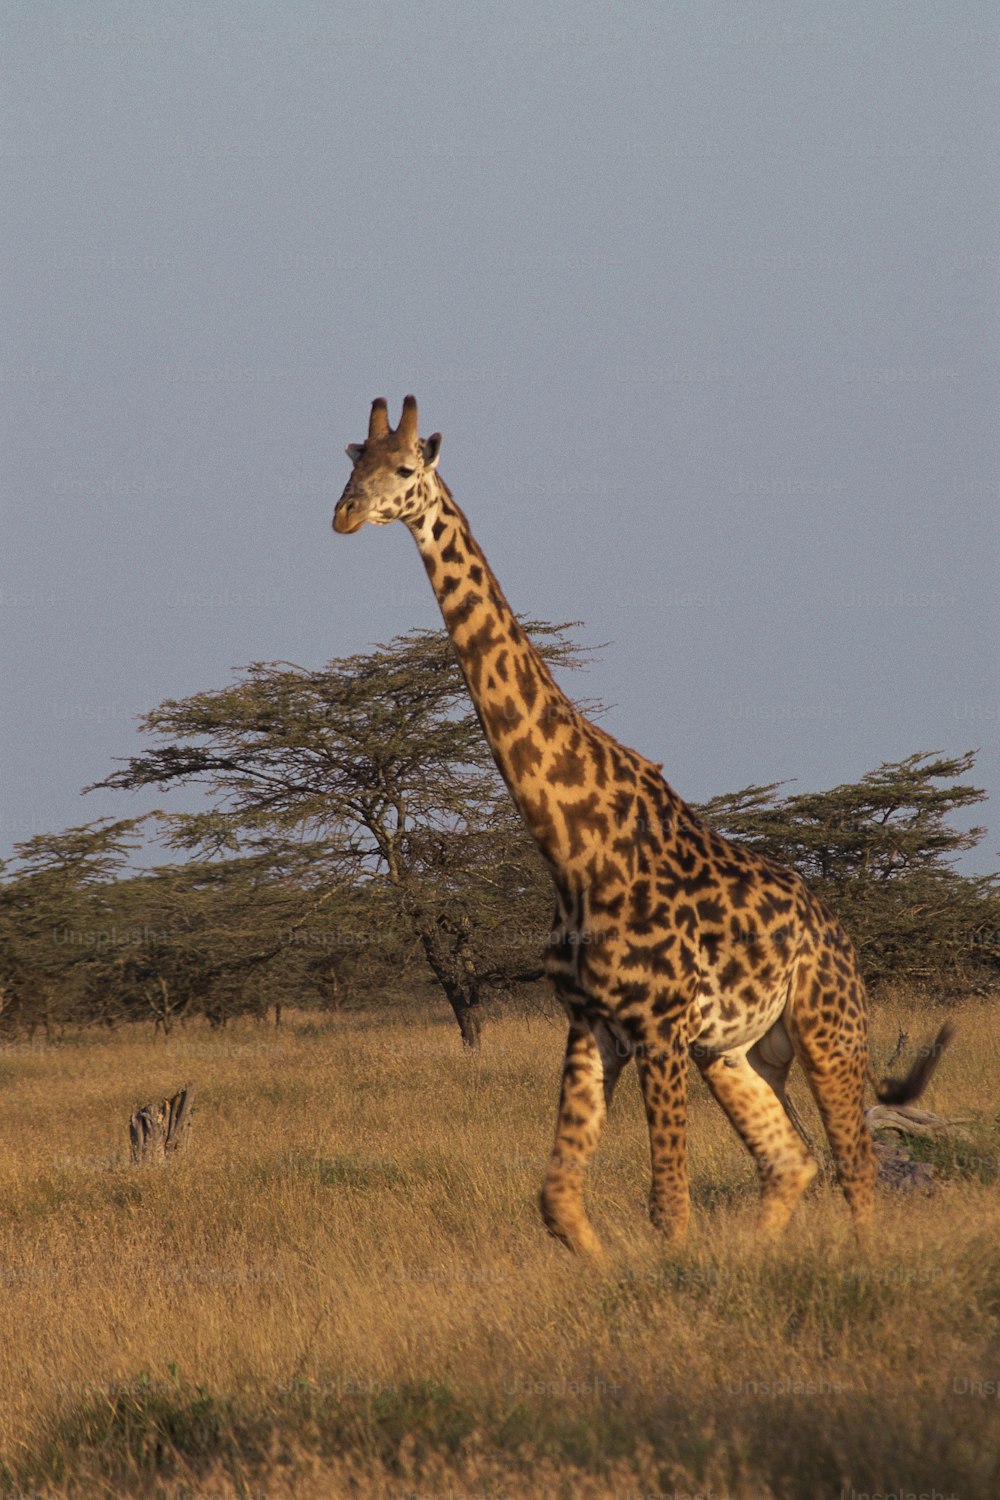 a giraffe is walking through a grassy field